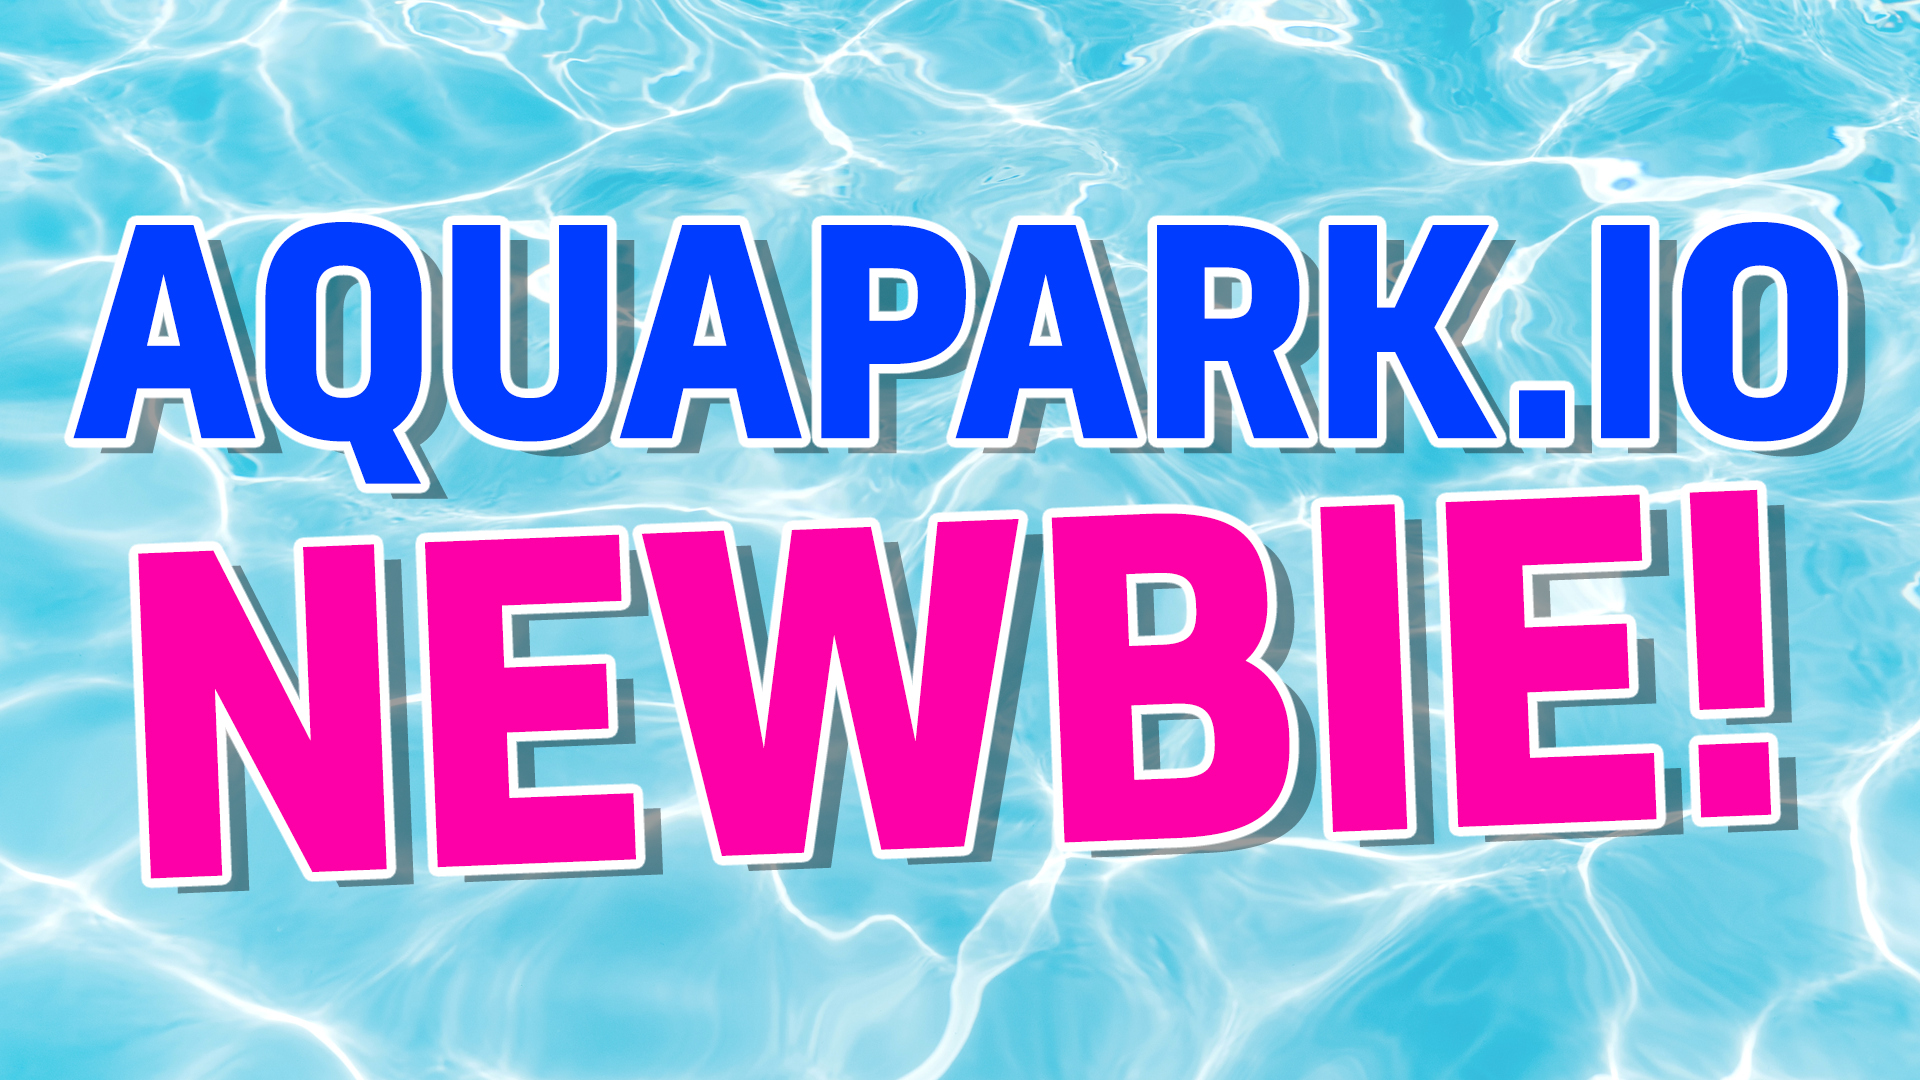 Aquapark newbie